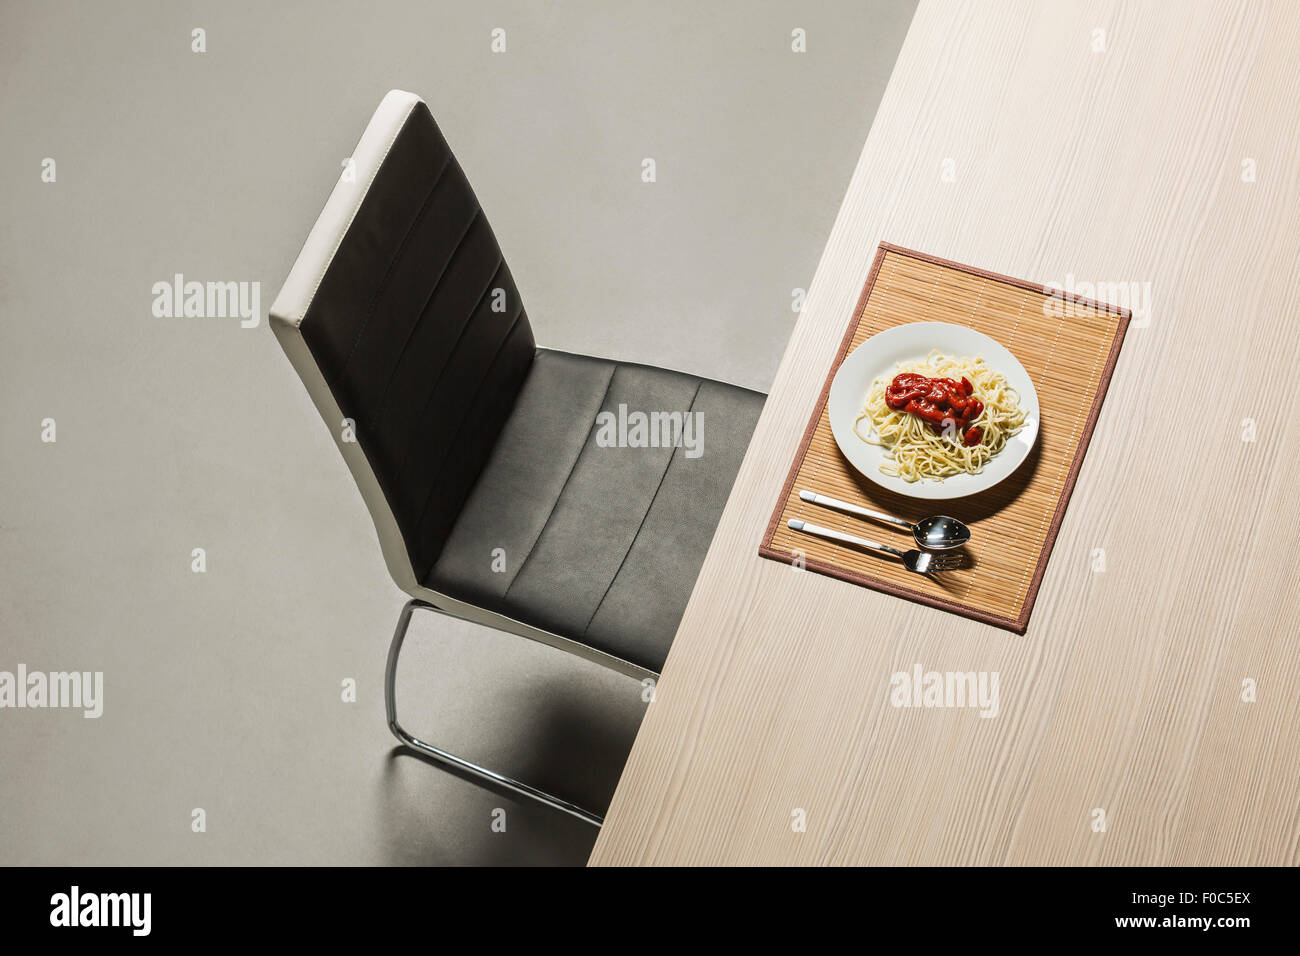 Espaguetis con salsa de tomate fresco servido en la placa en la tabla Foto de stock